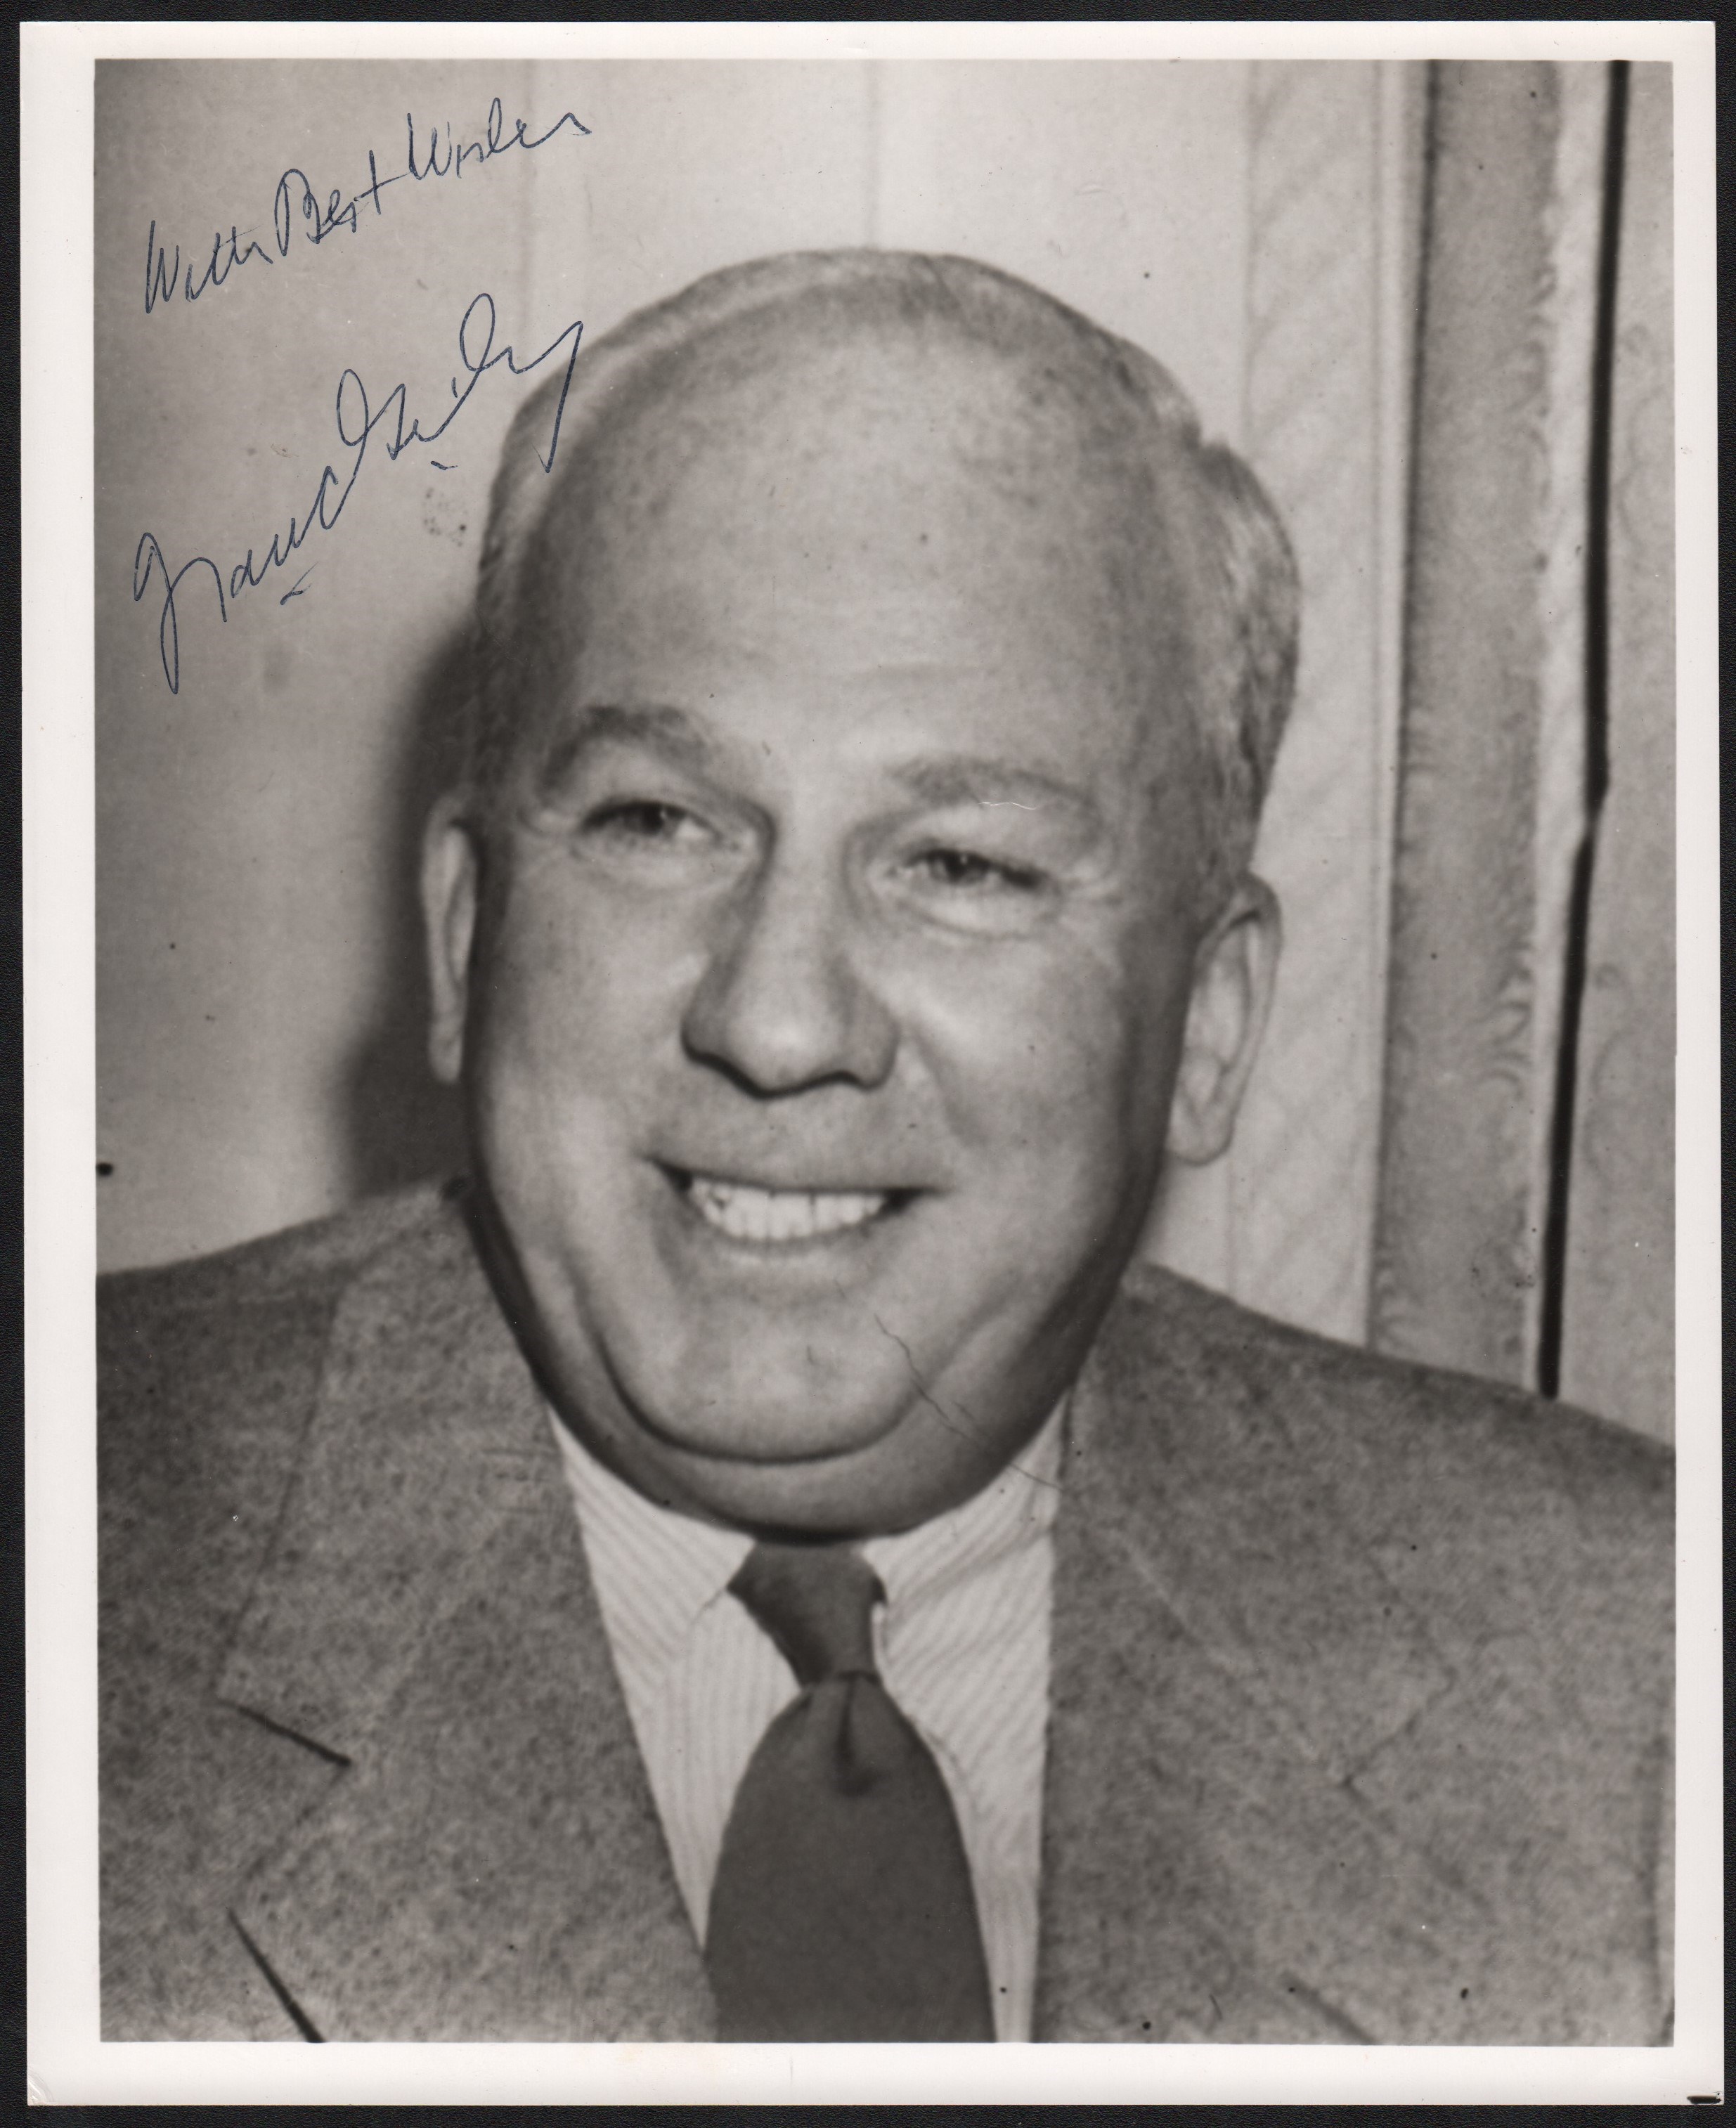 Baseball Autographs - Nice Warren Giles Signed Photo 8x10